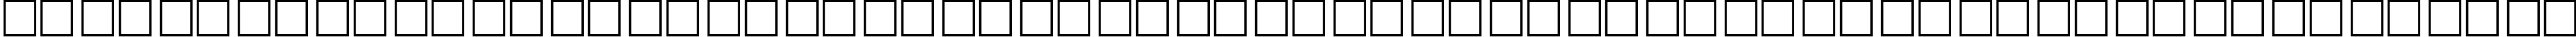 Пример написания русского алфавита шрифтом Time Roman Bold35